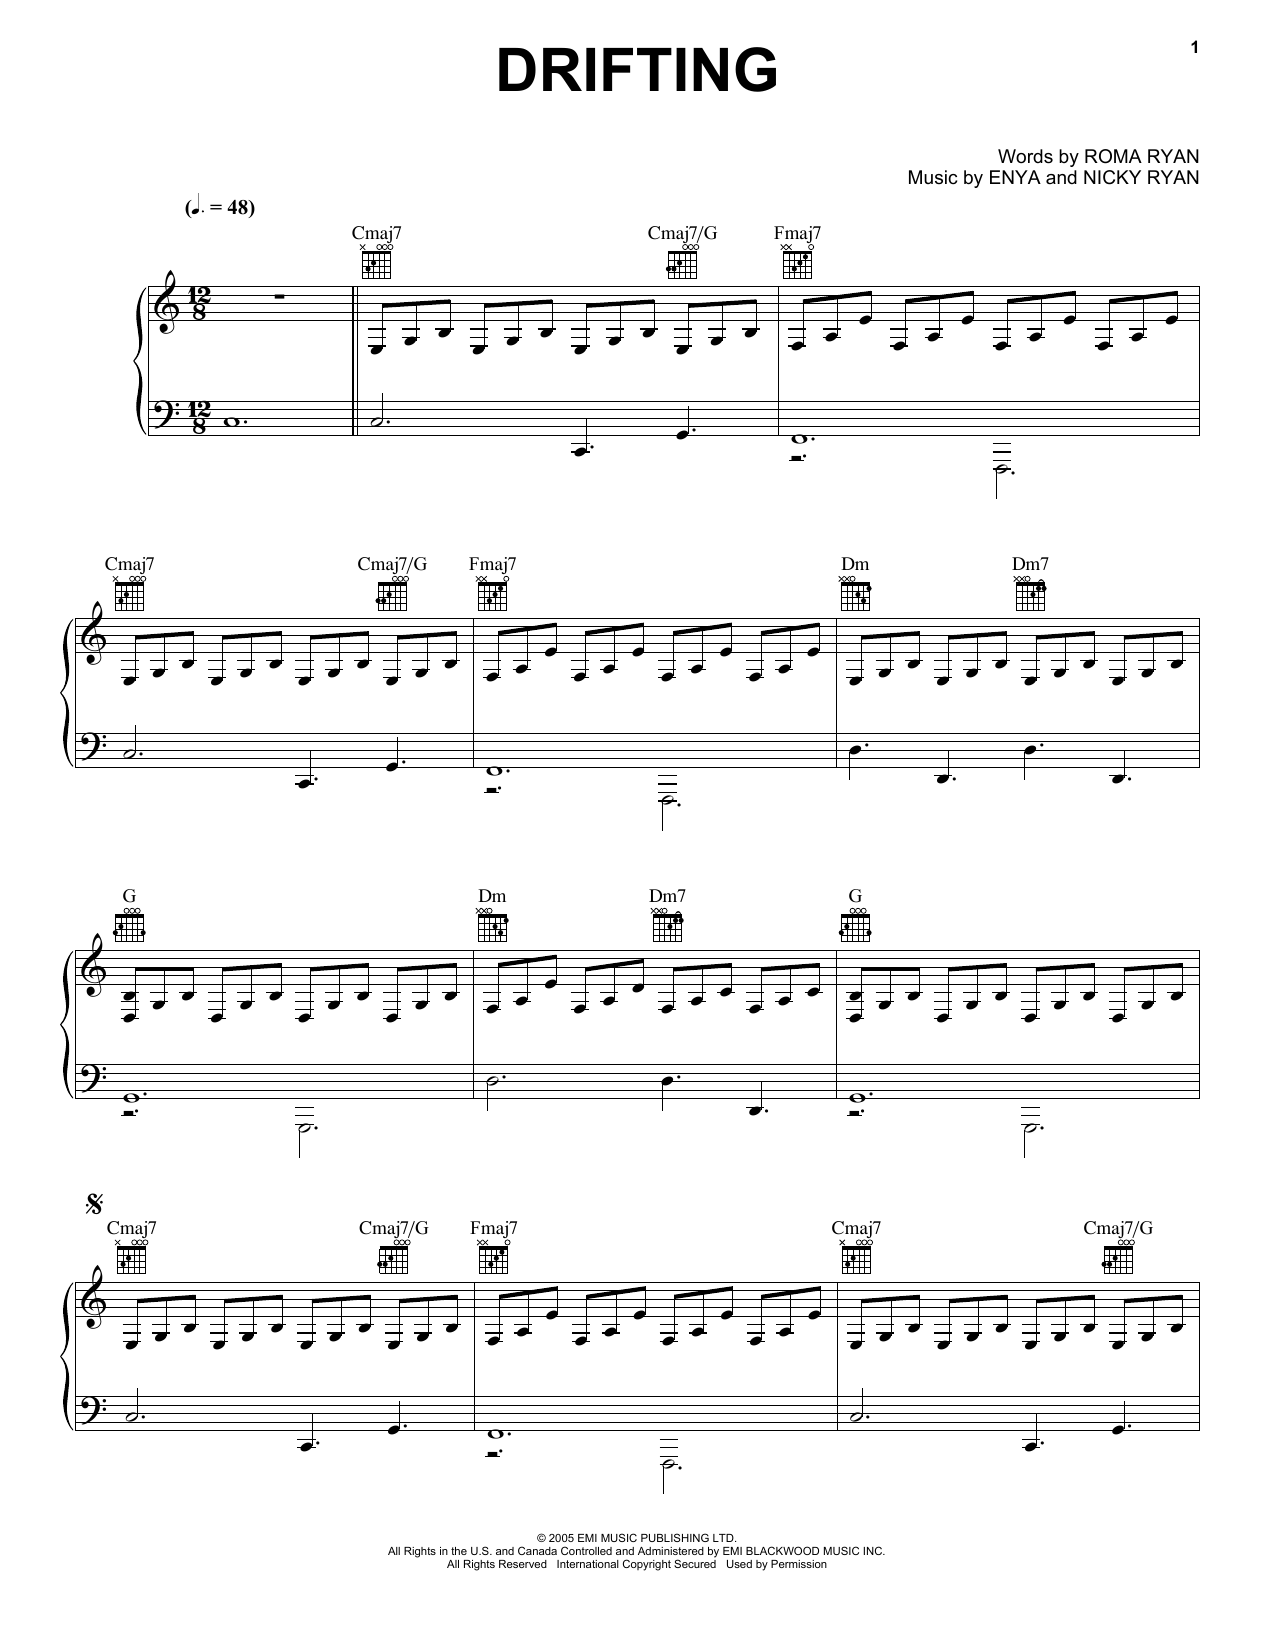 Enya Drifting Sheet Music Notes & Chords for Piano, Vocal & Guitar (Right-Hand Melody) - Download or Print PDF